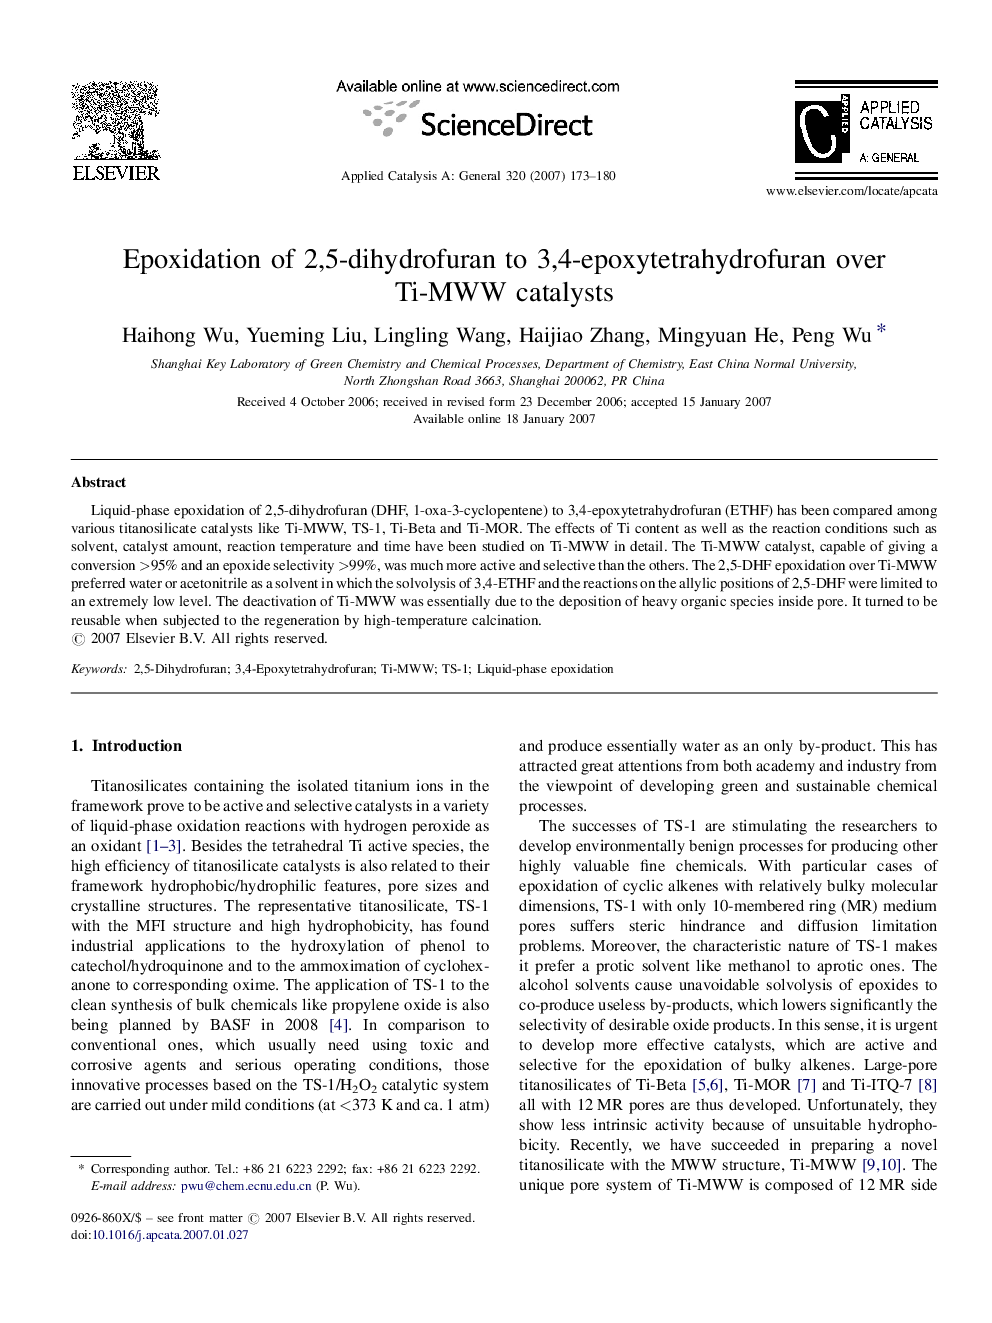 Epoxidation of 2,5-dihydrofuran to 3,4-epoxytetrahydrofuran over Ti-MWW catalysts